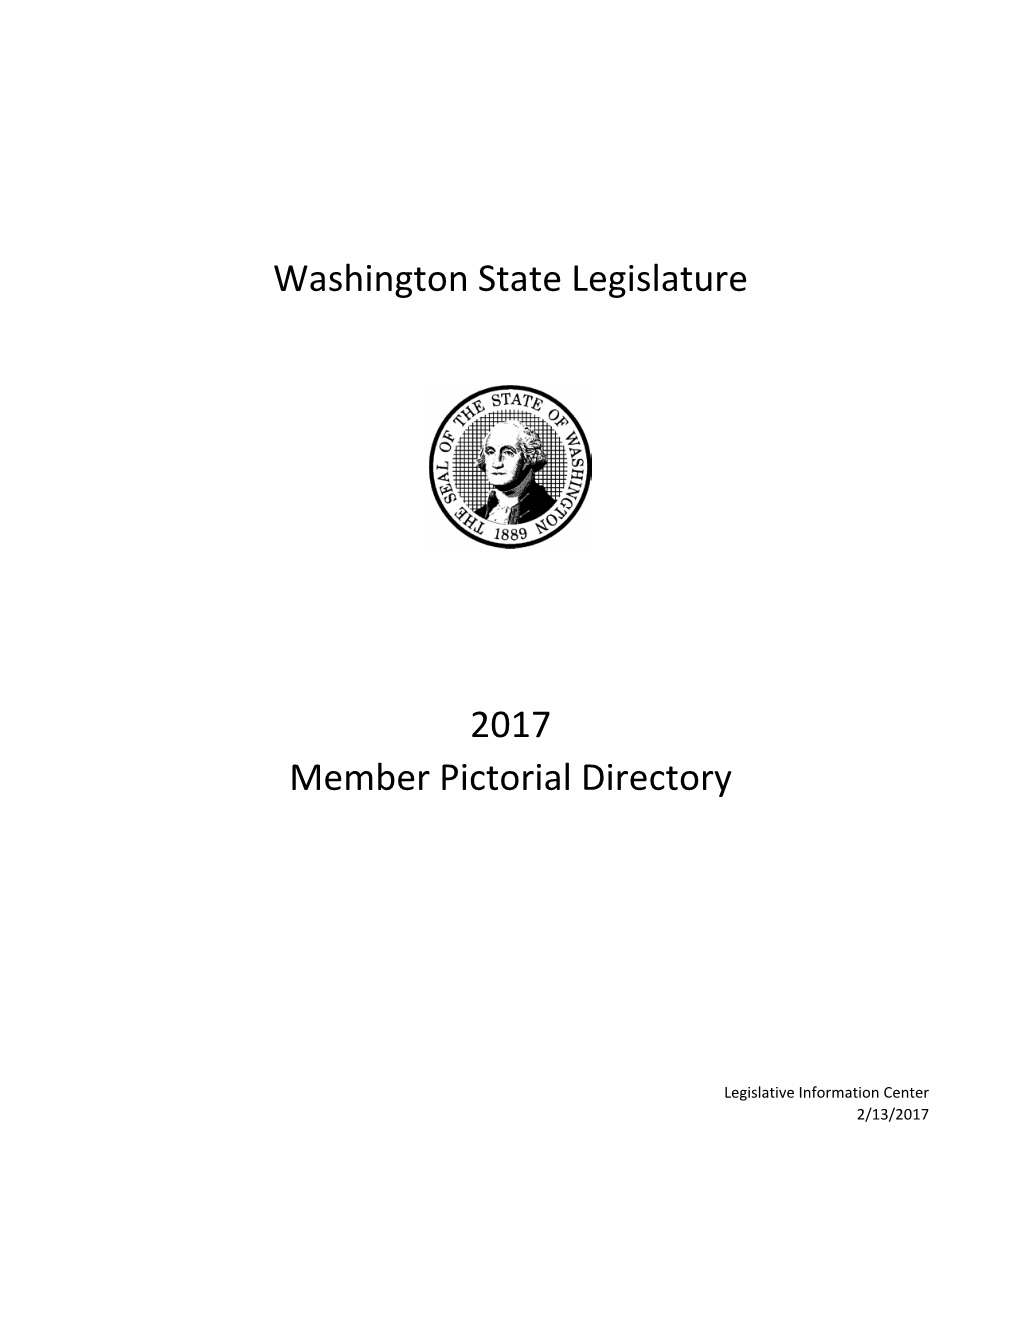 Washington State Legislature 2017 Member Pictorial Directory